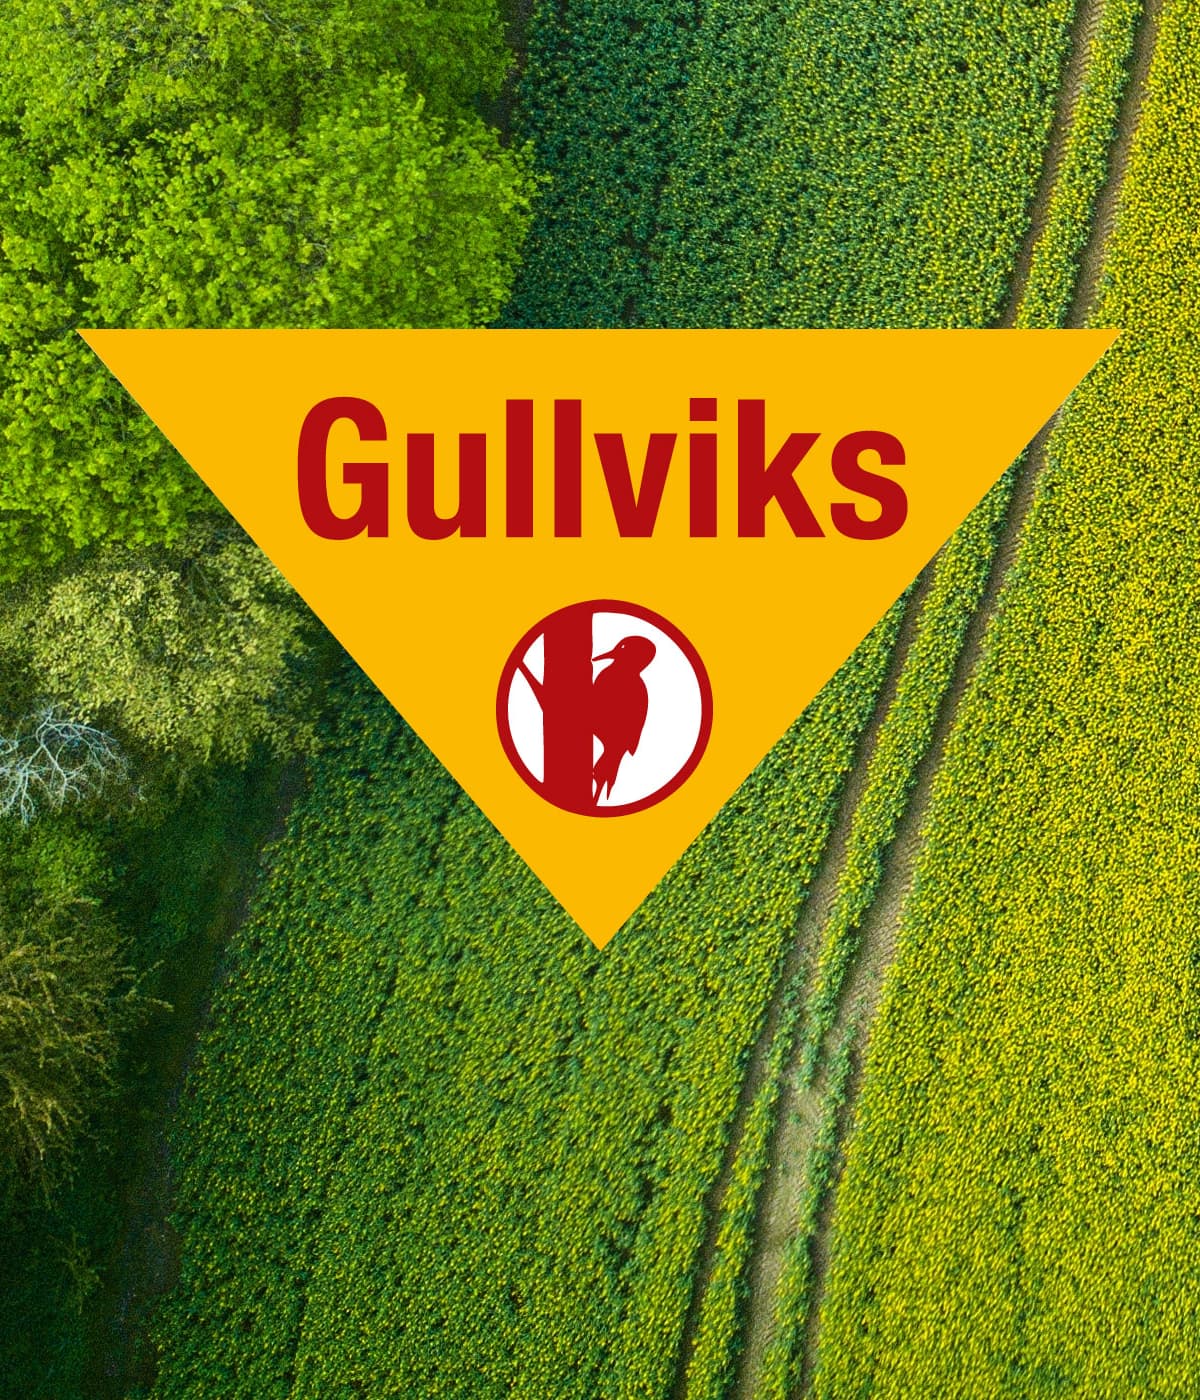 Gullviks logo med grön åkermark i bakgrunden